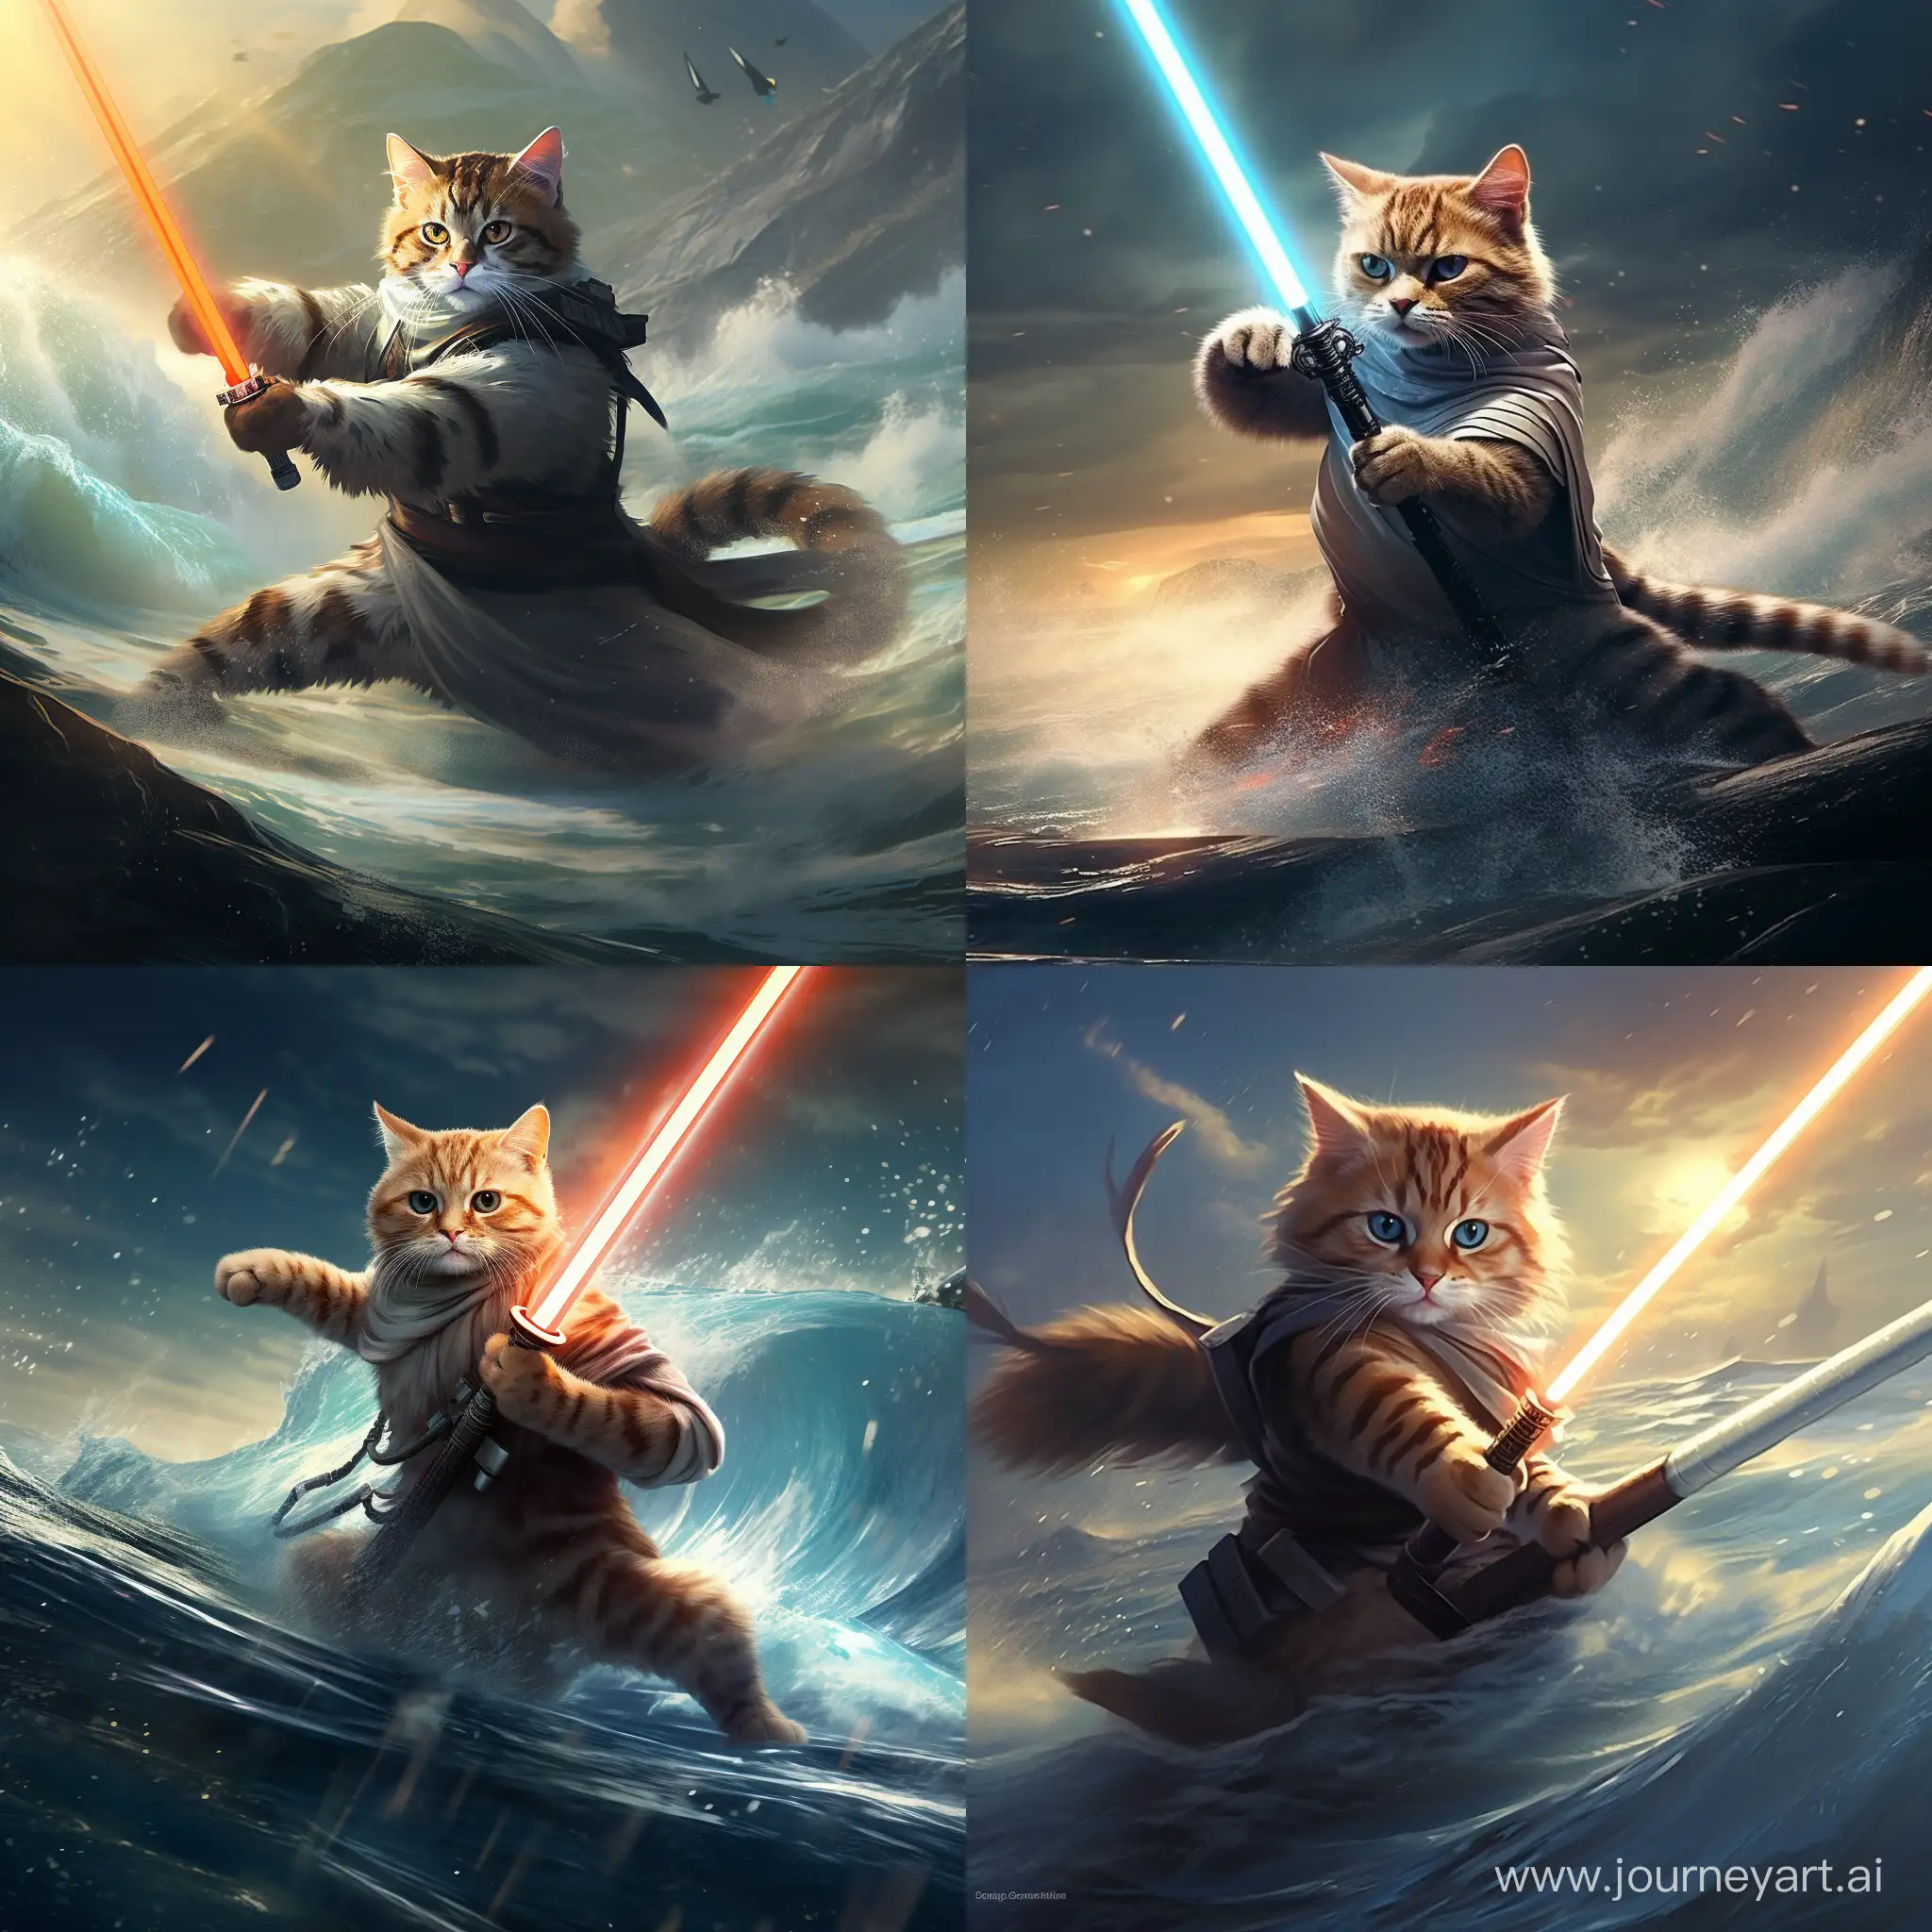 Playful-Cat-Battles-with-Lightsaber-on-Surfboard